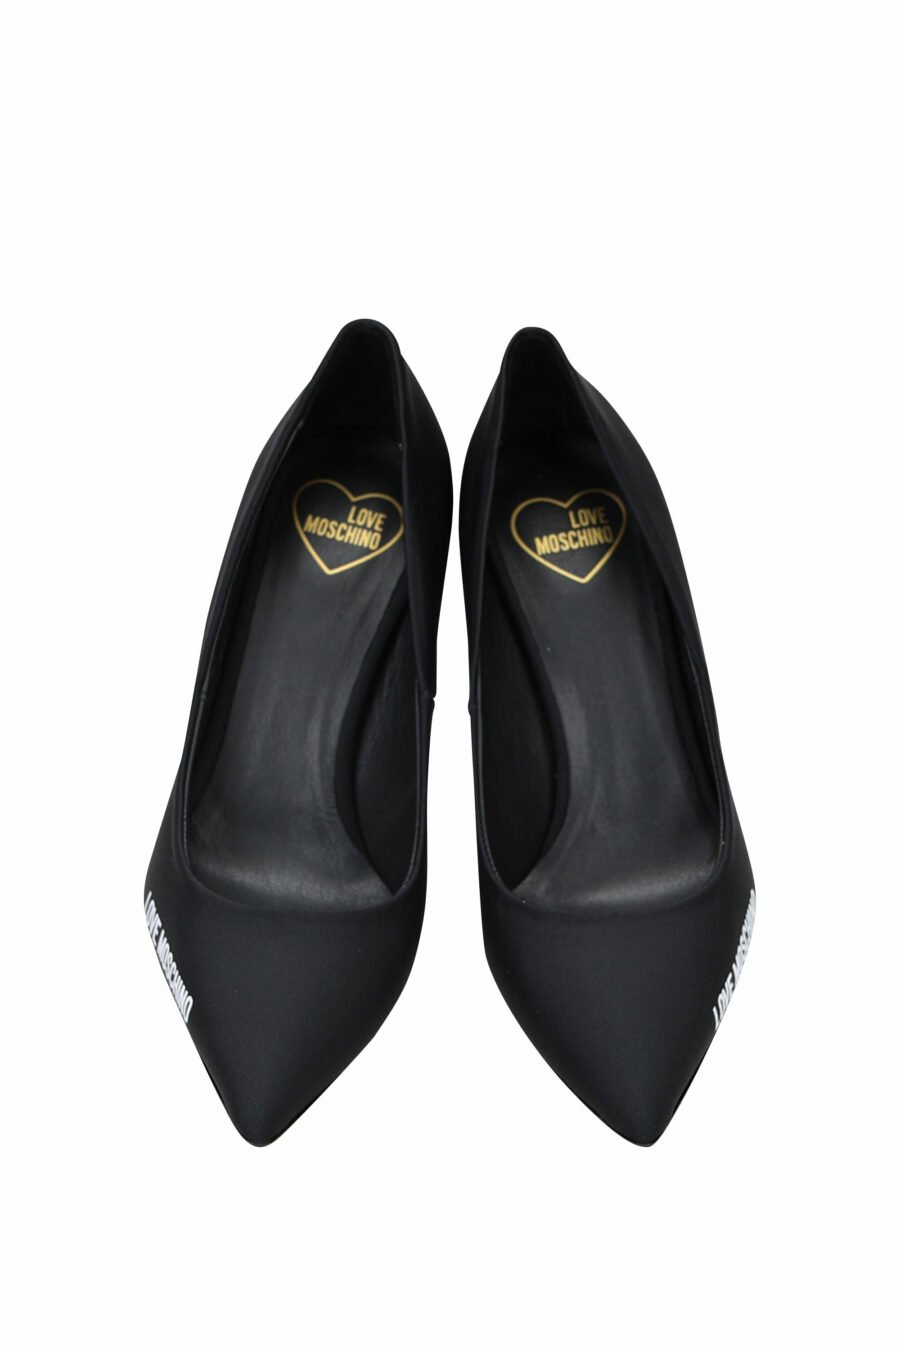 Black heels with mini-logo - 8054653052130 4